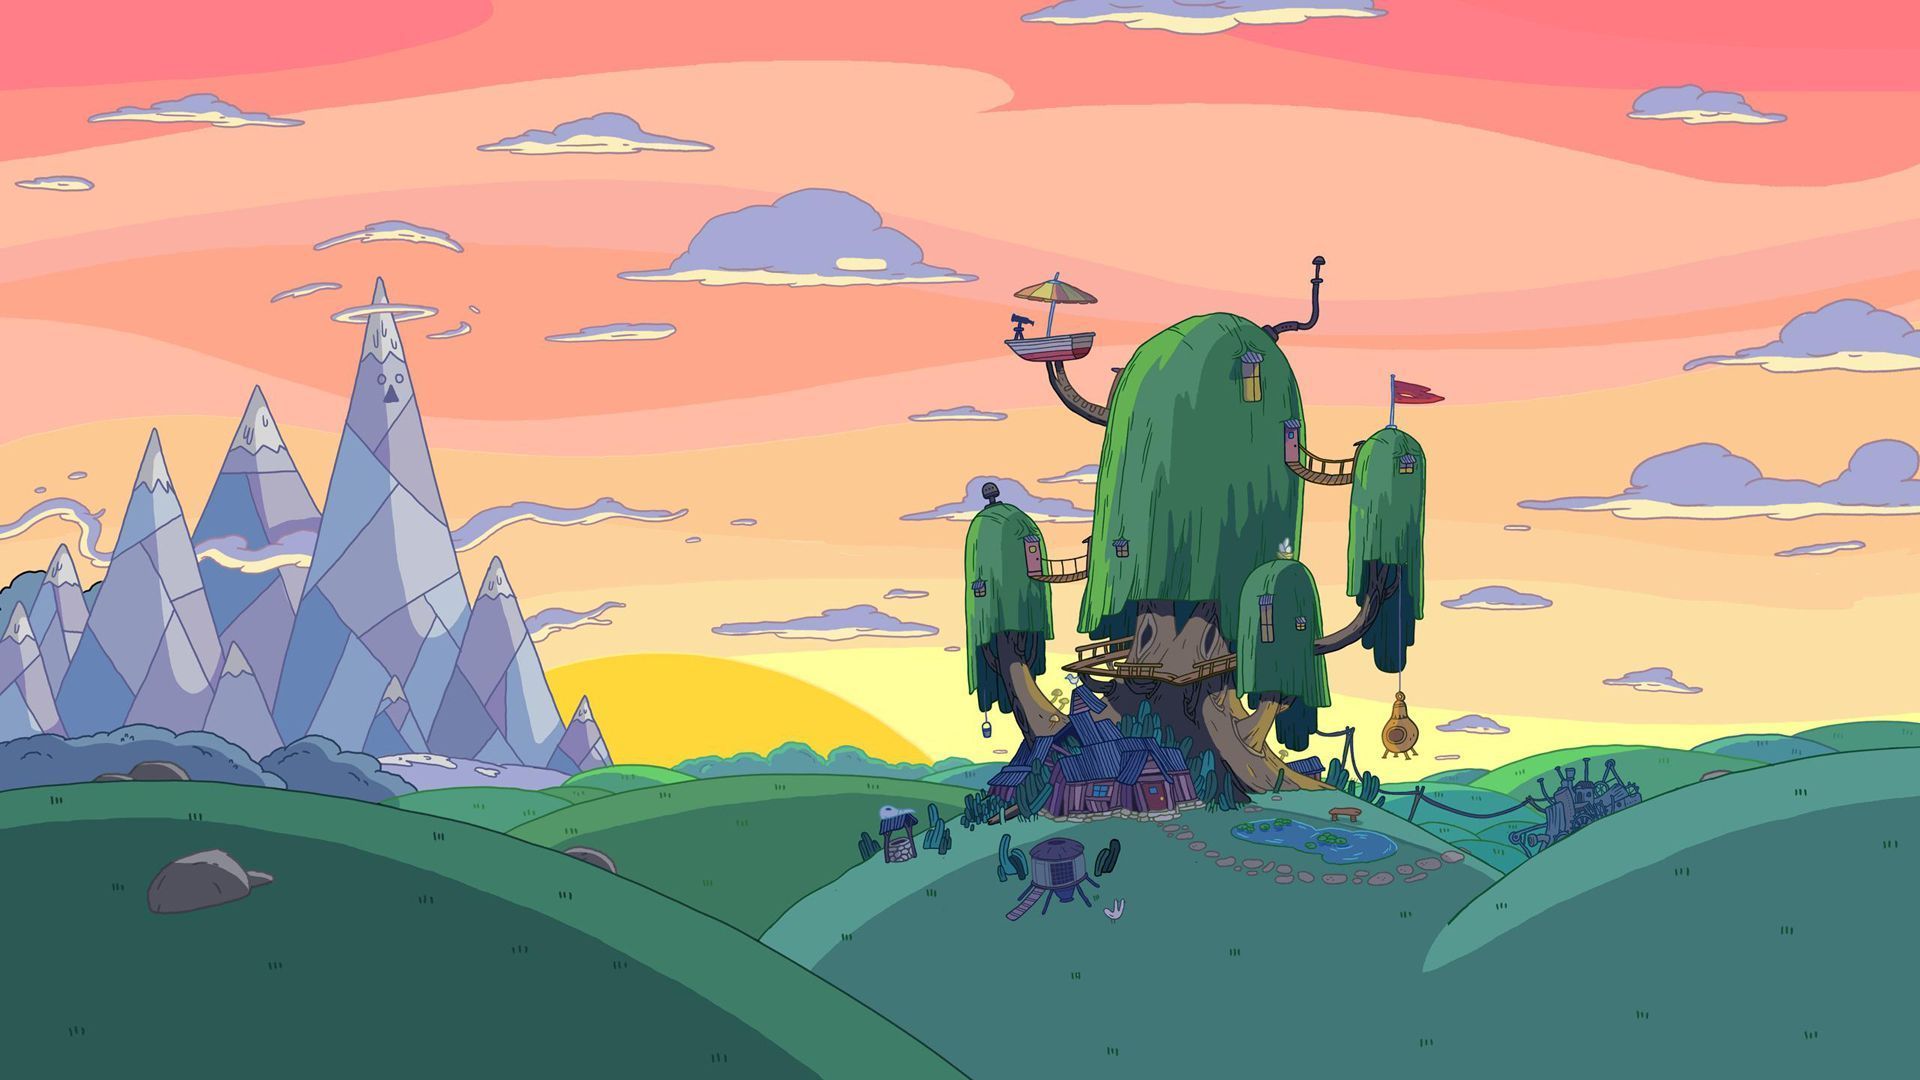 TV Show Adventure Time HD Wallpaper